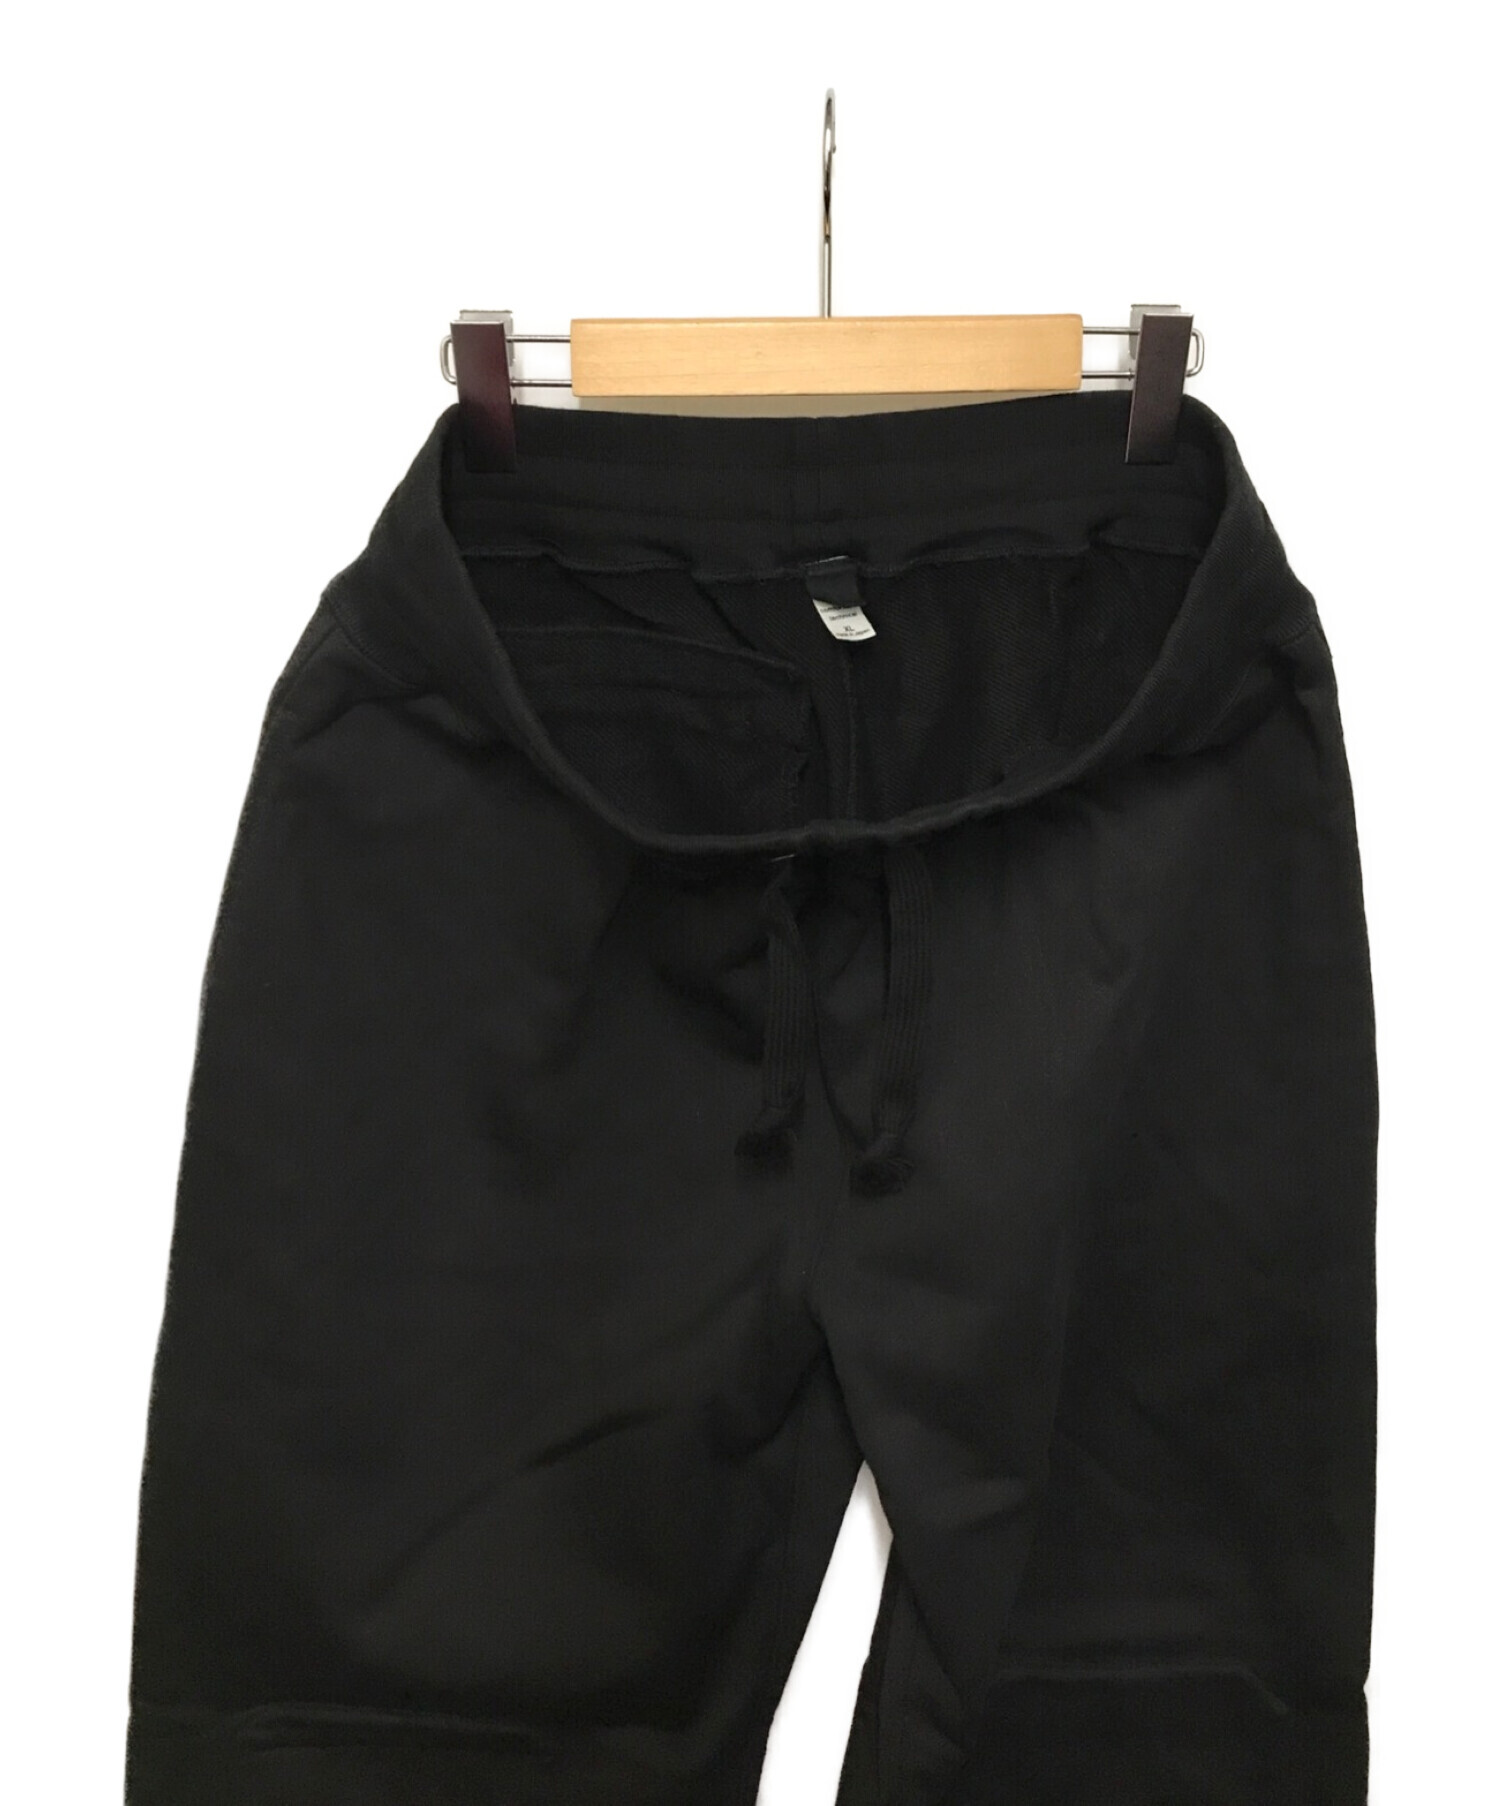 mocT (モクティ) TAKU OBATA (タク オバタ) BREAK SWEAT PANTS ブラック サイズ:XL